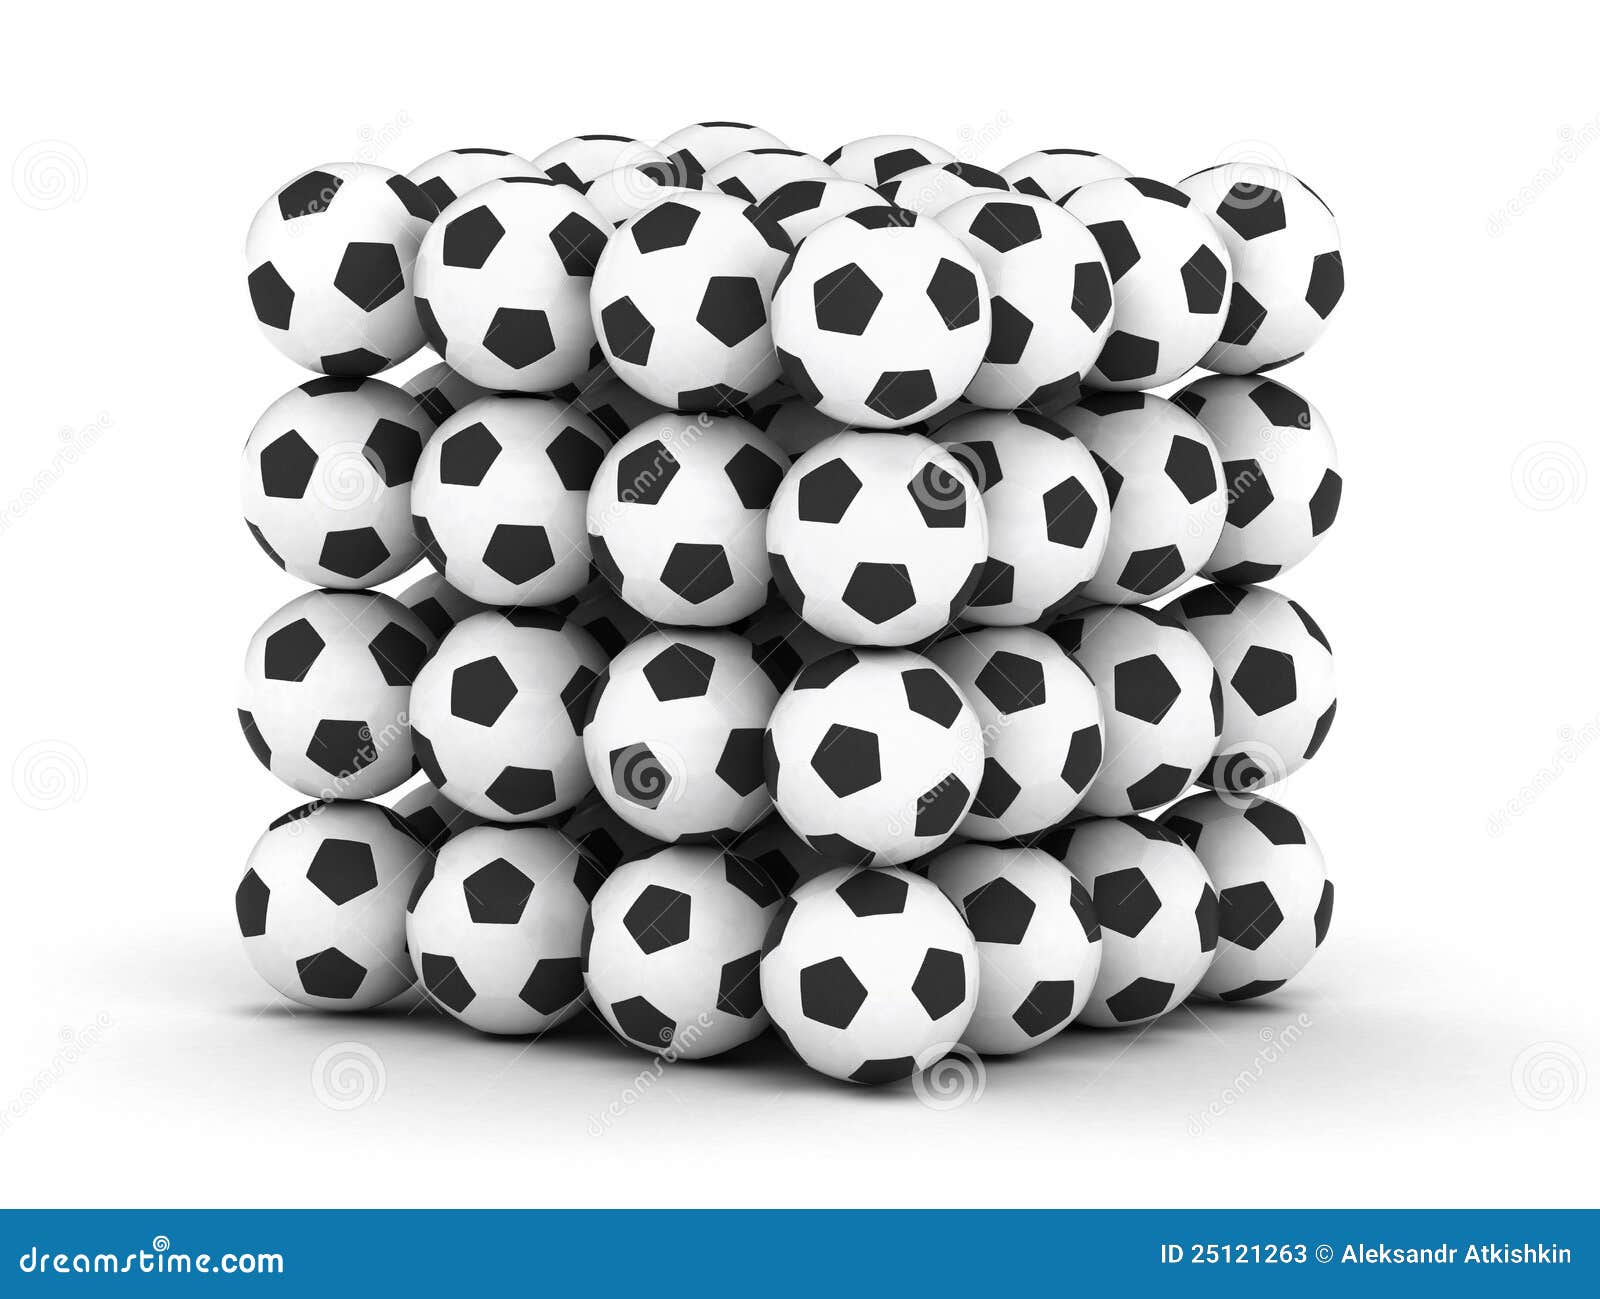 stack-football-soccer-balls-25121263.jpg